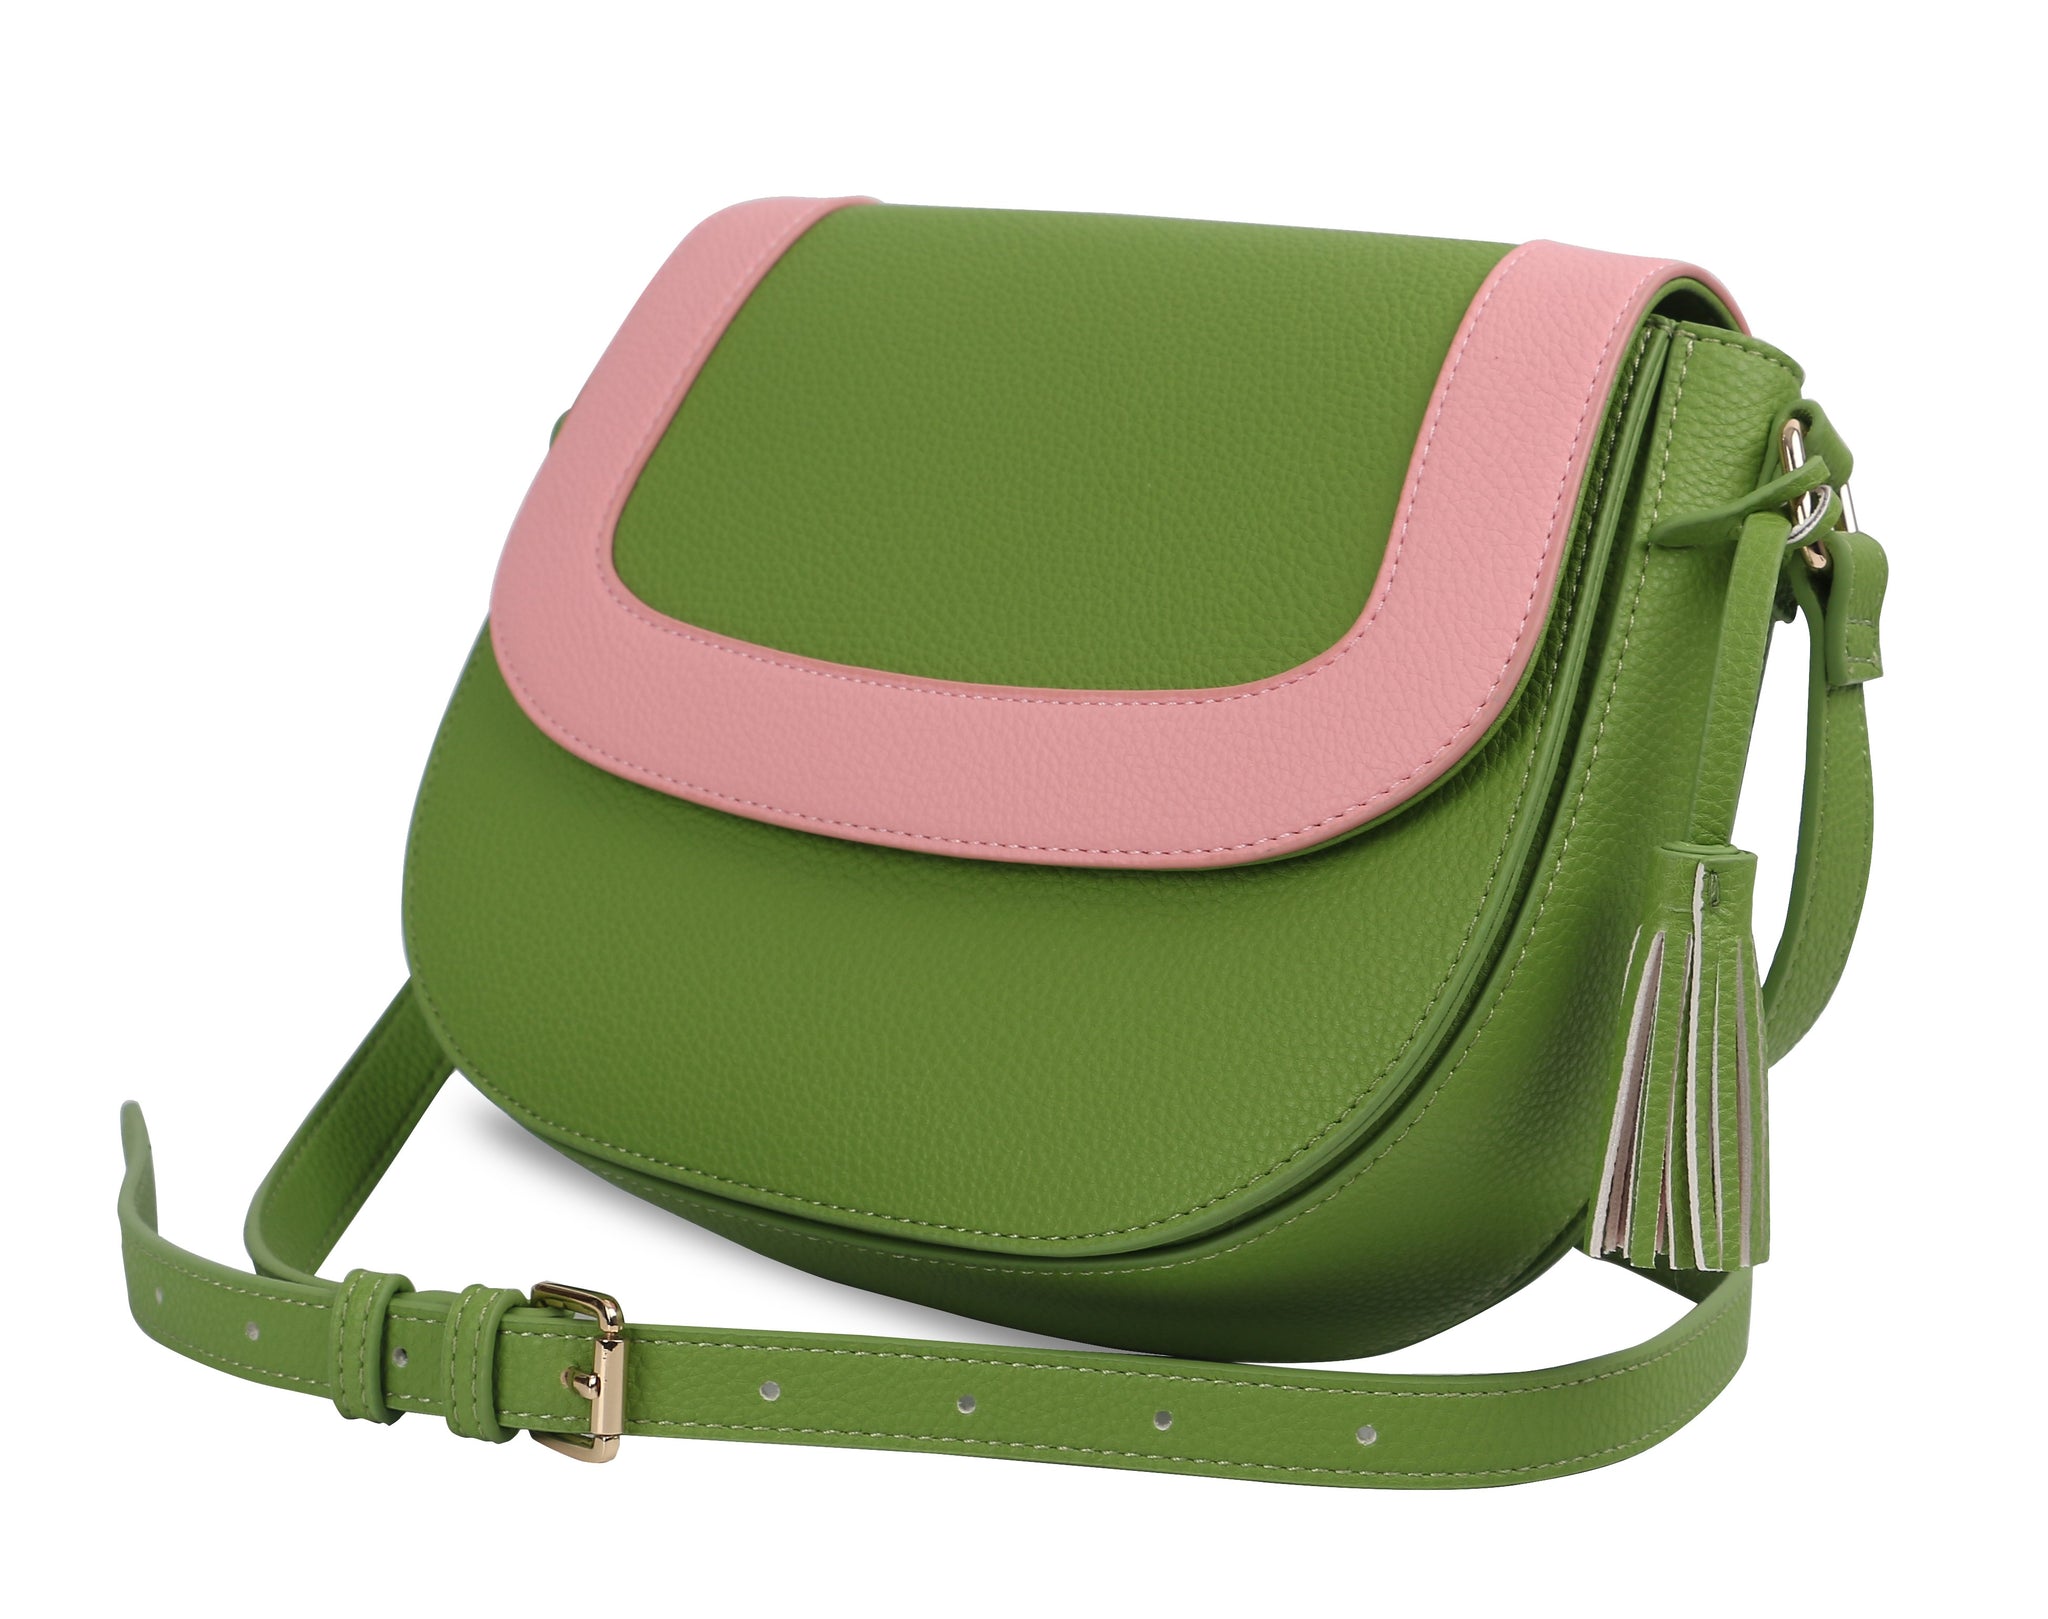 Apple Green Leather Tassel Cross Body Bag